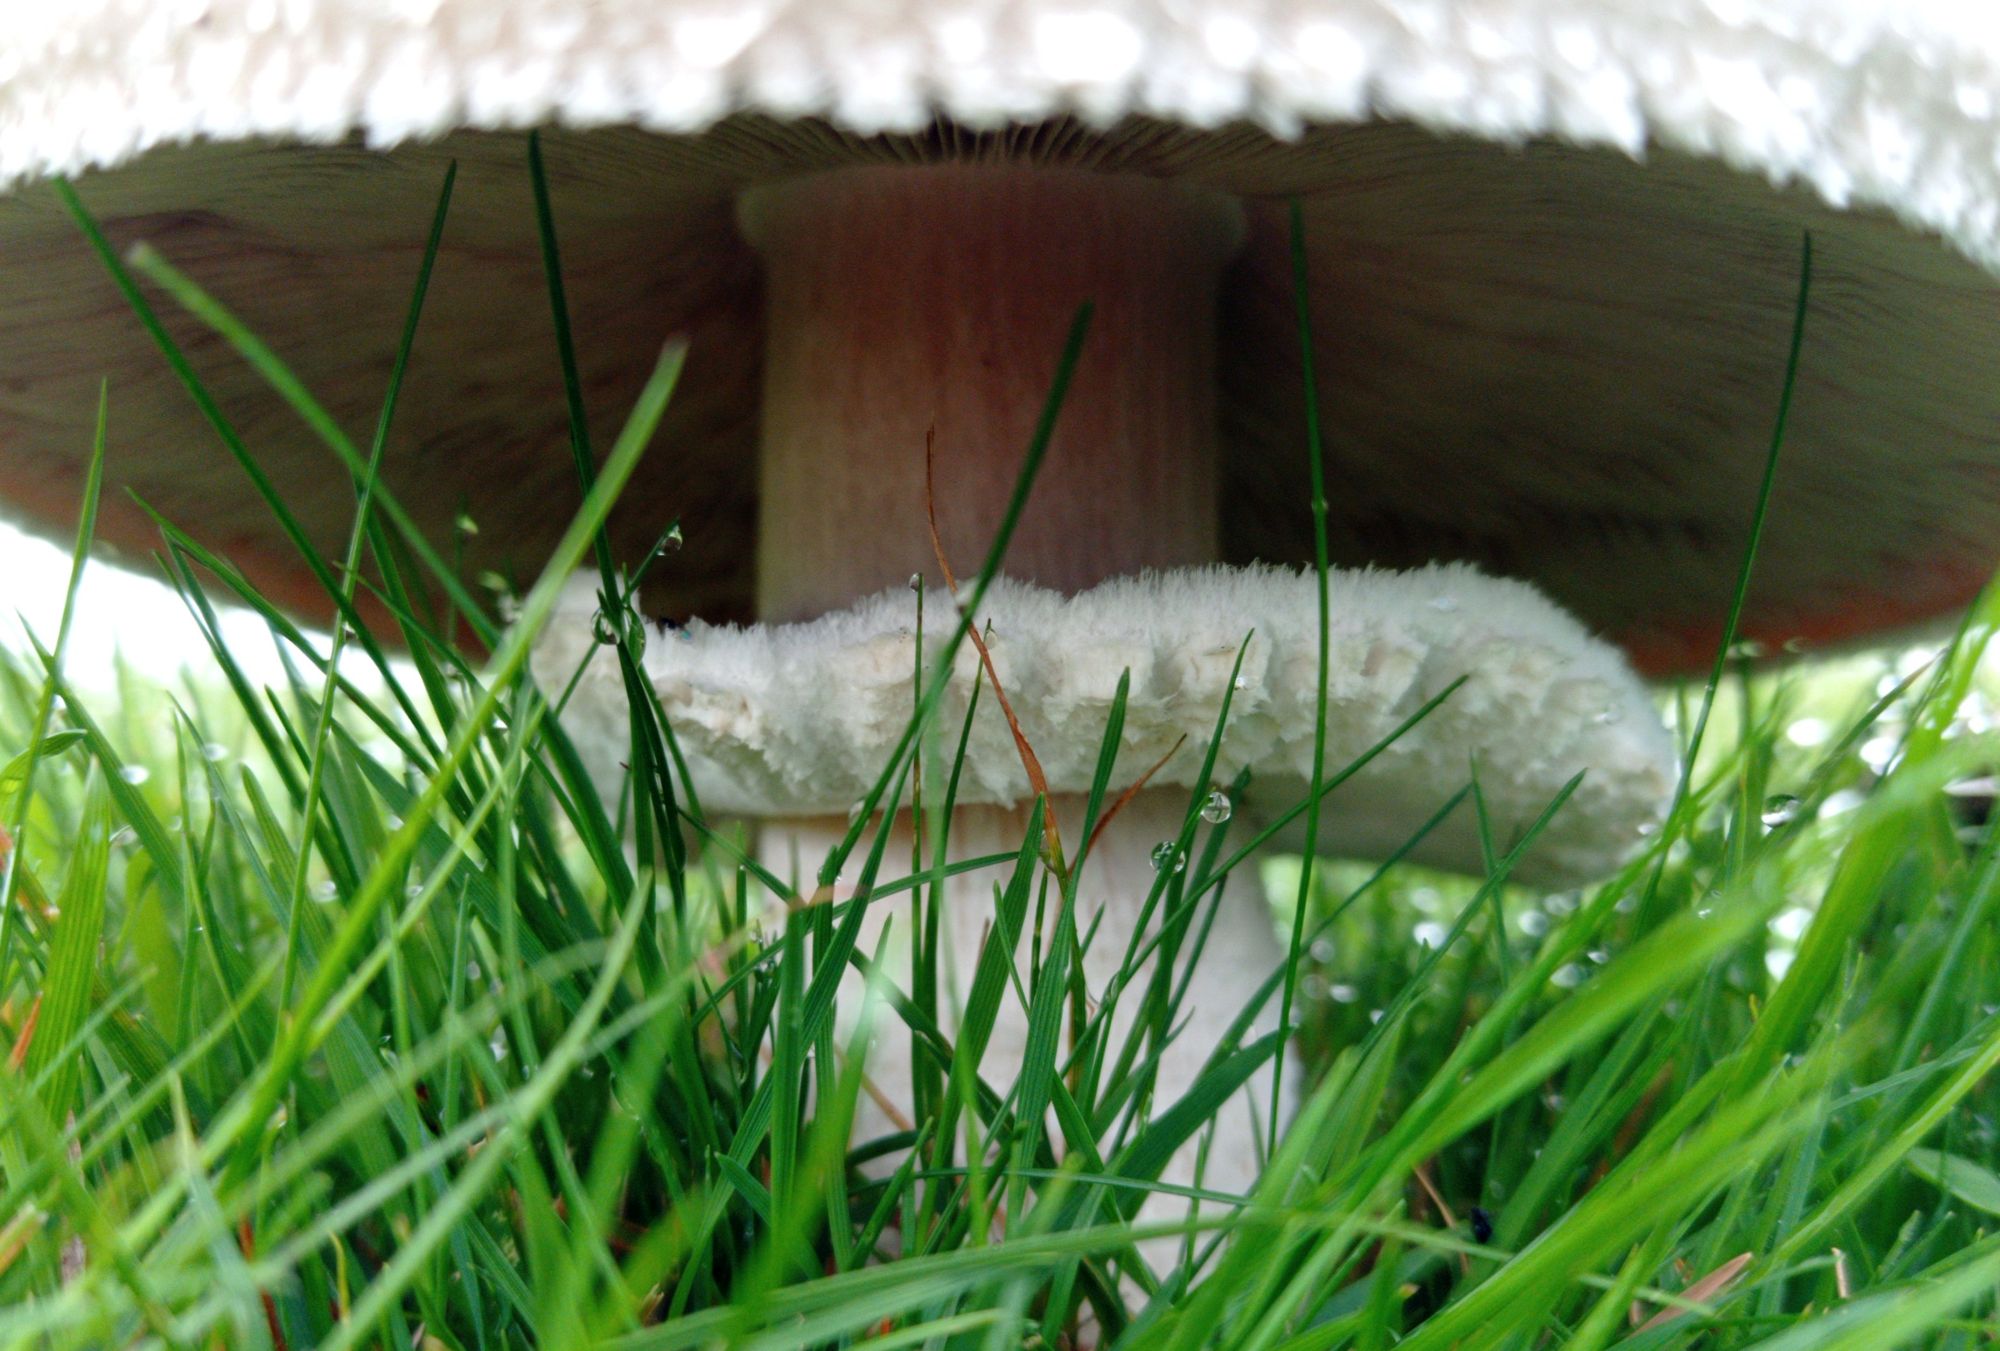 Horse mushroom - underside